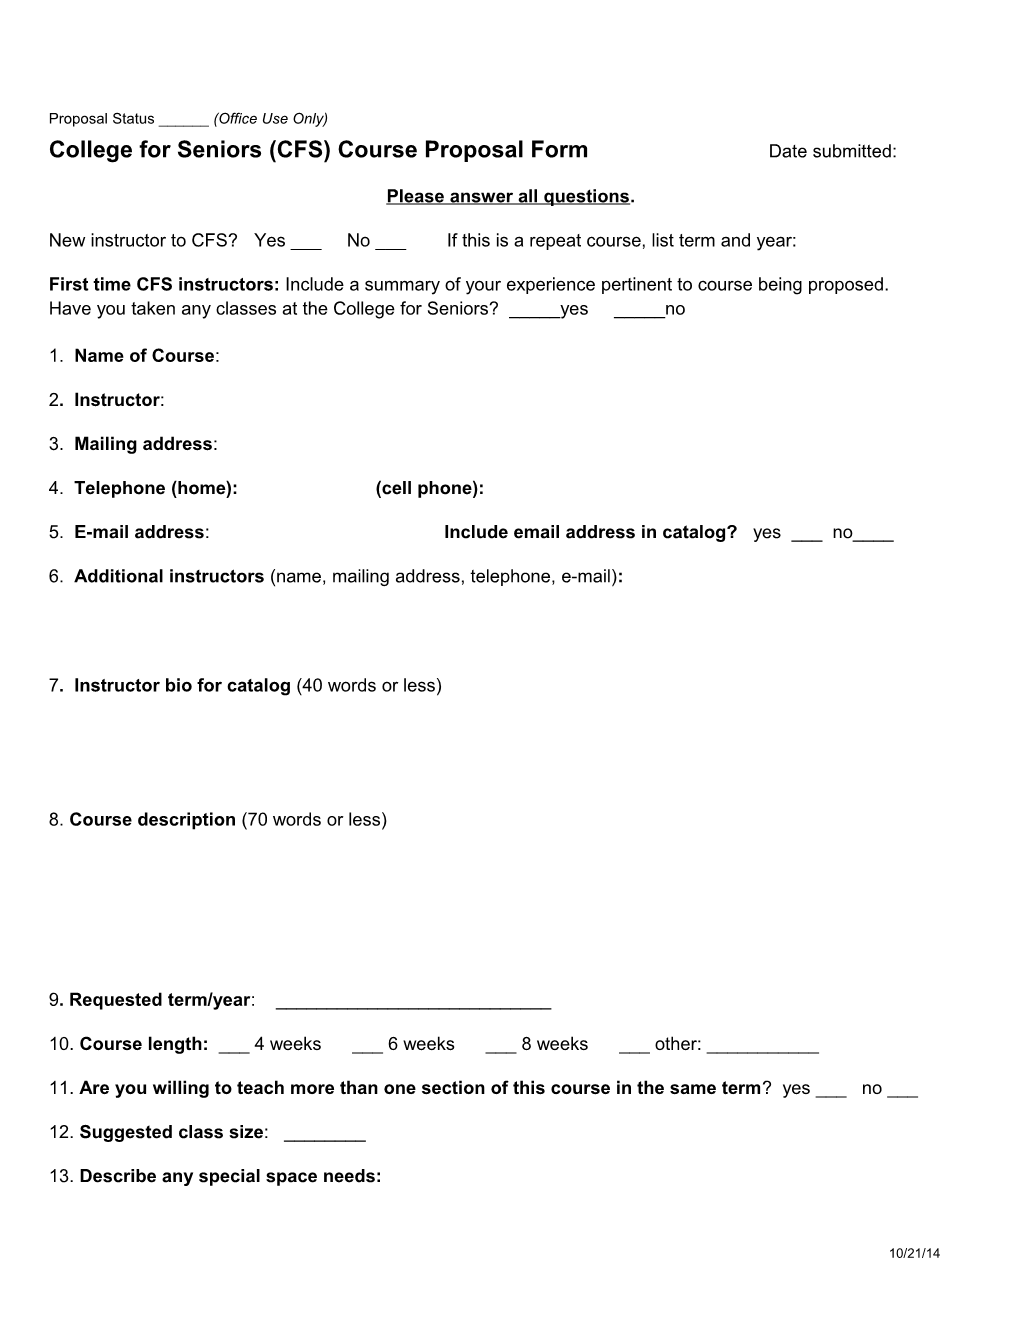 CFS Course Proposal Form